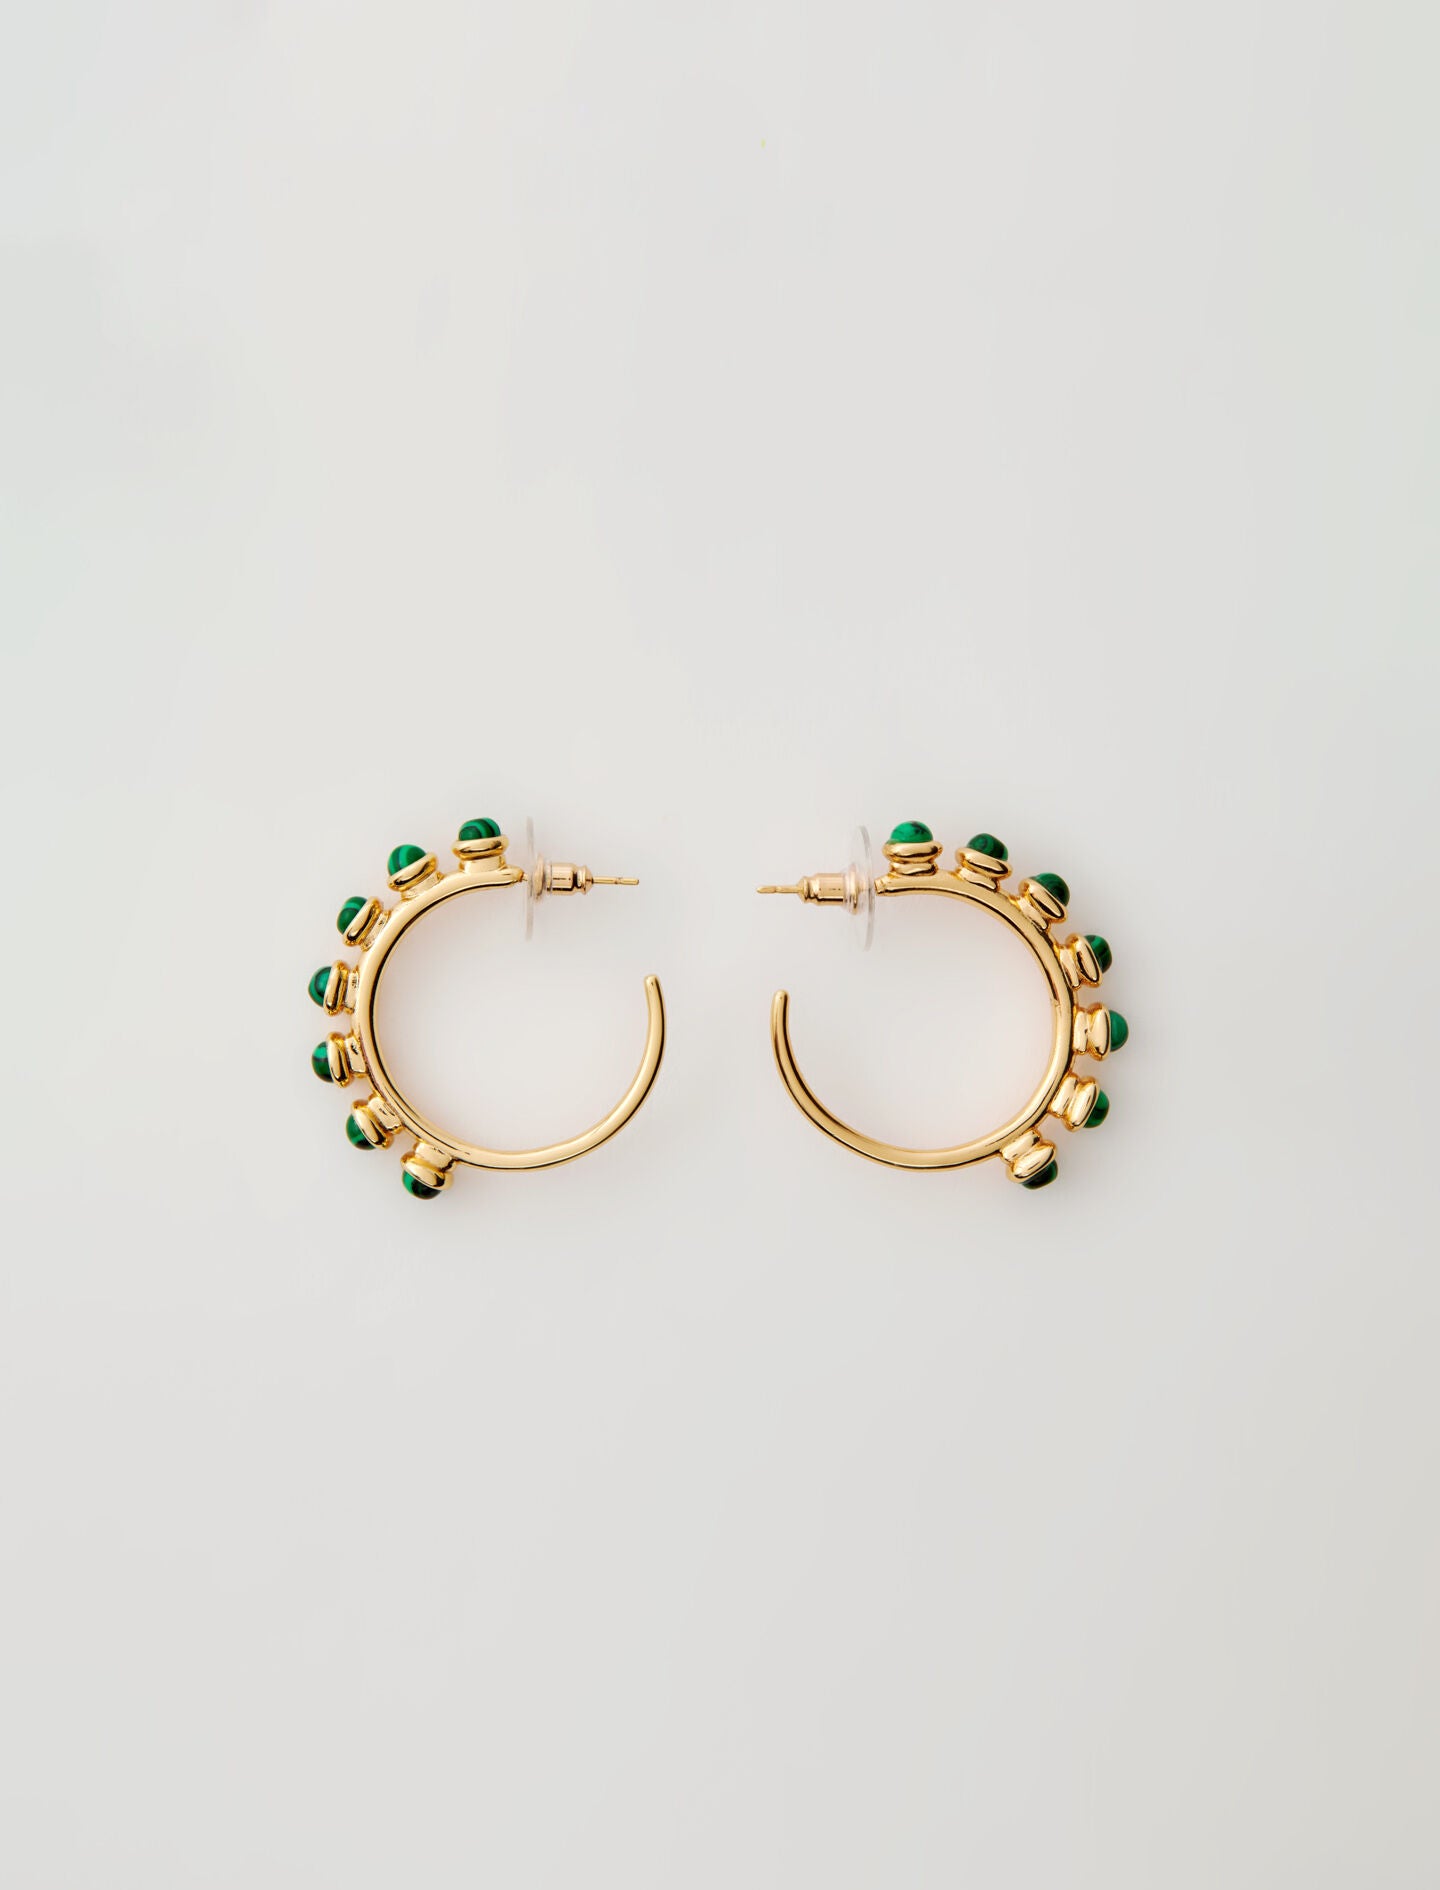 Gold-featured-rhinestone earrings